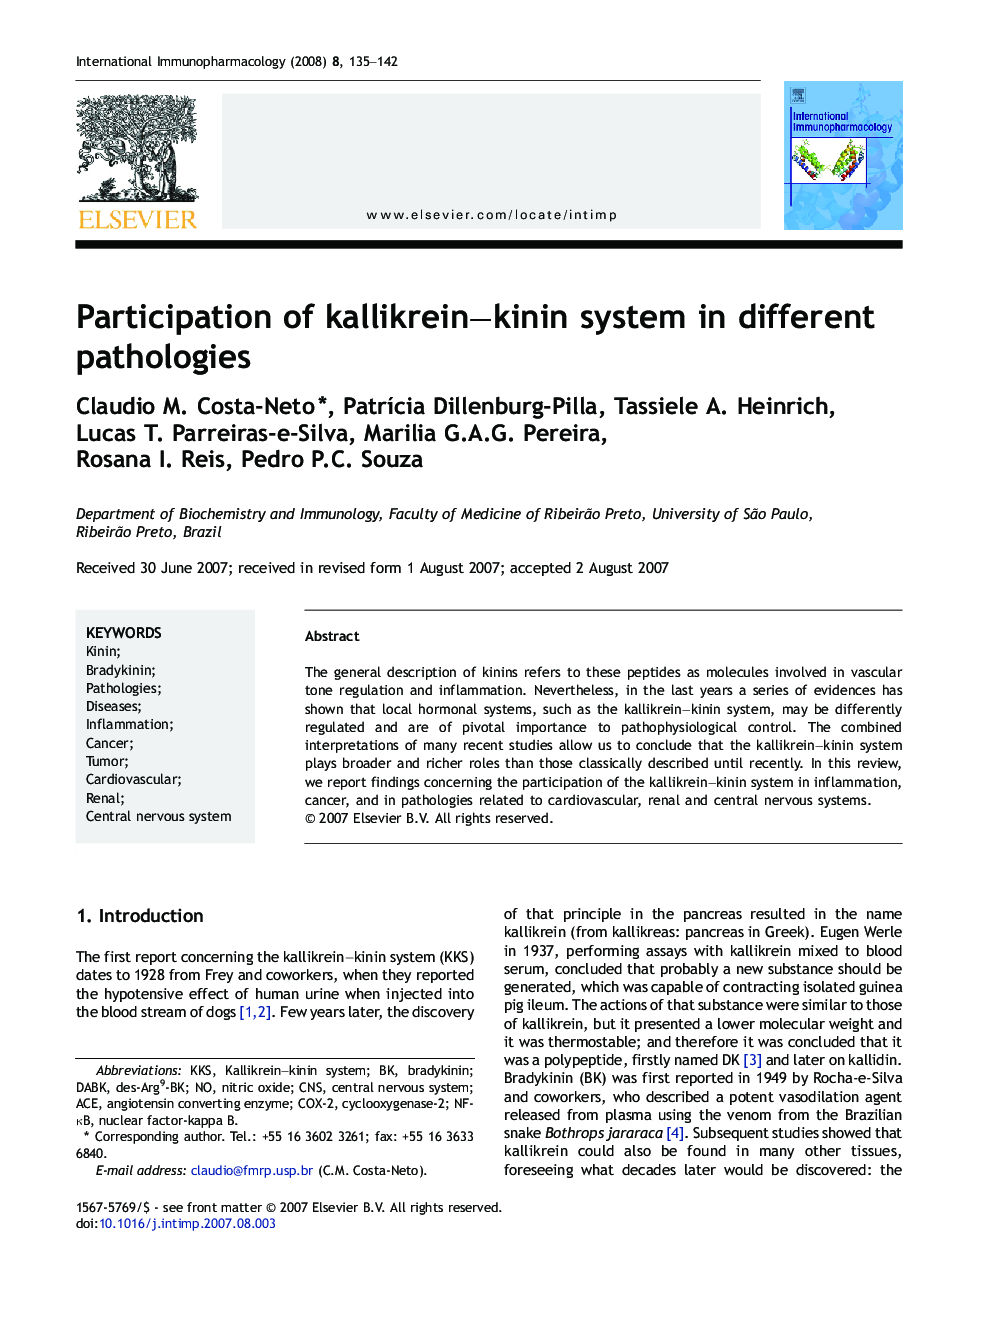 Participation of kallikrein–kinin system in different pathologies